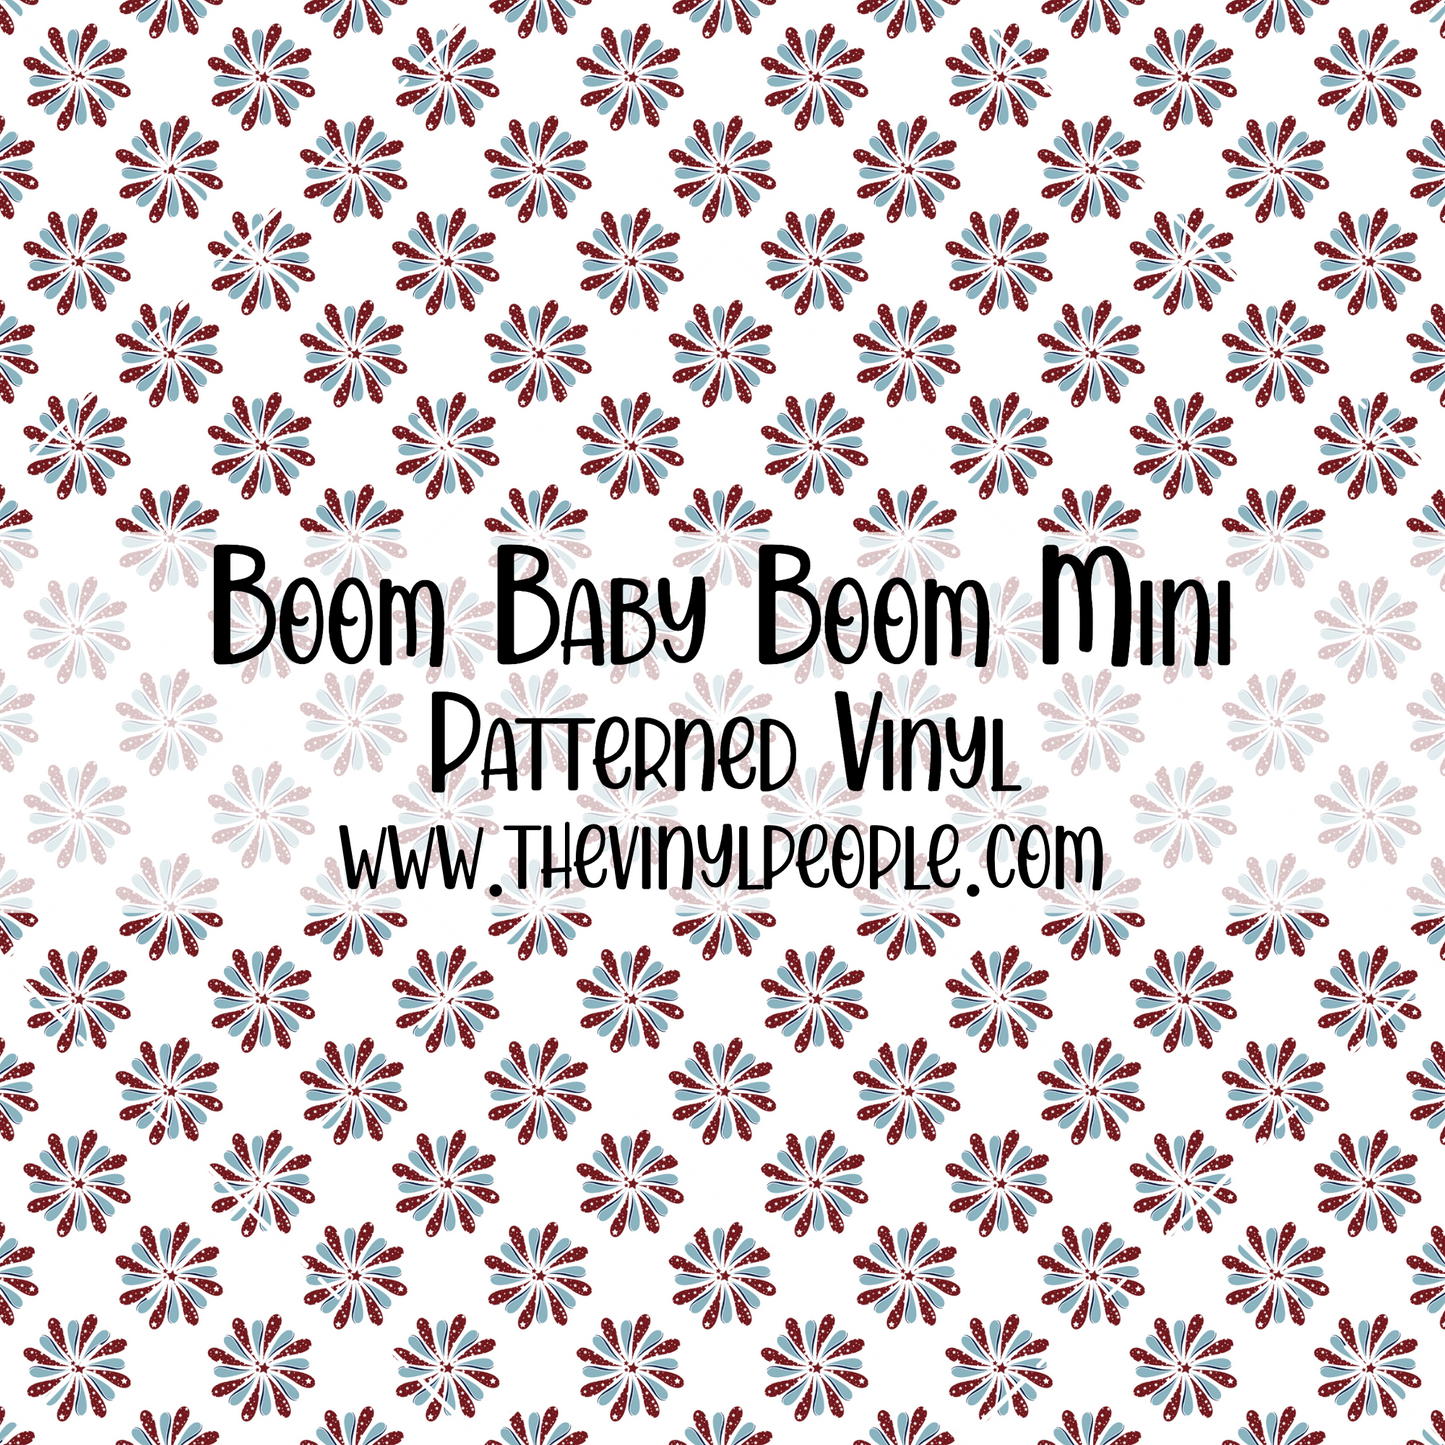 Boom Baby Boom Patterned Vinyl